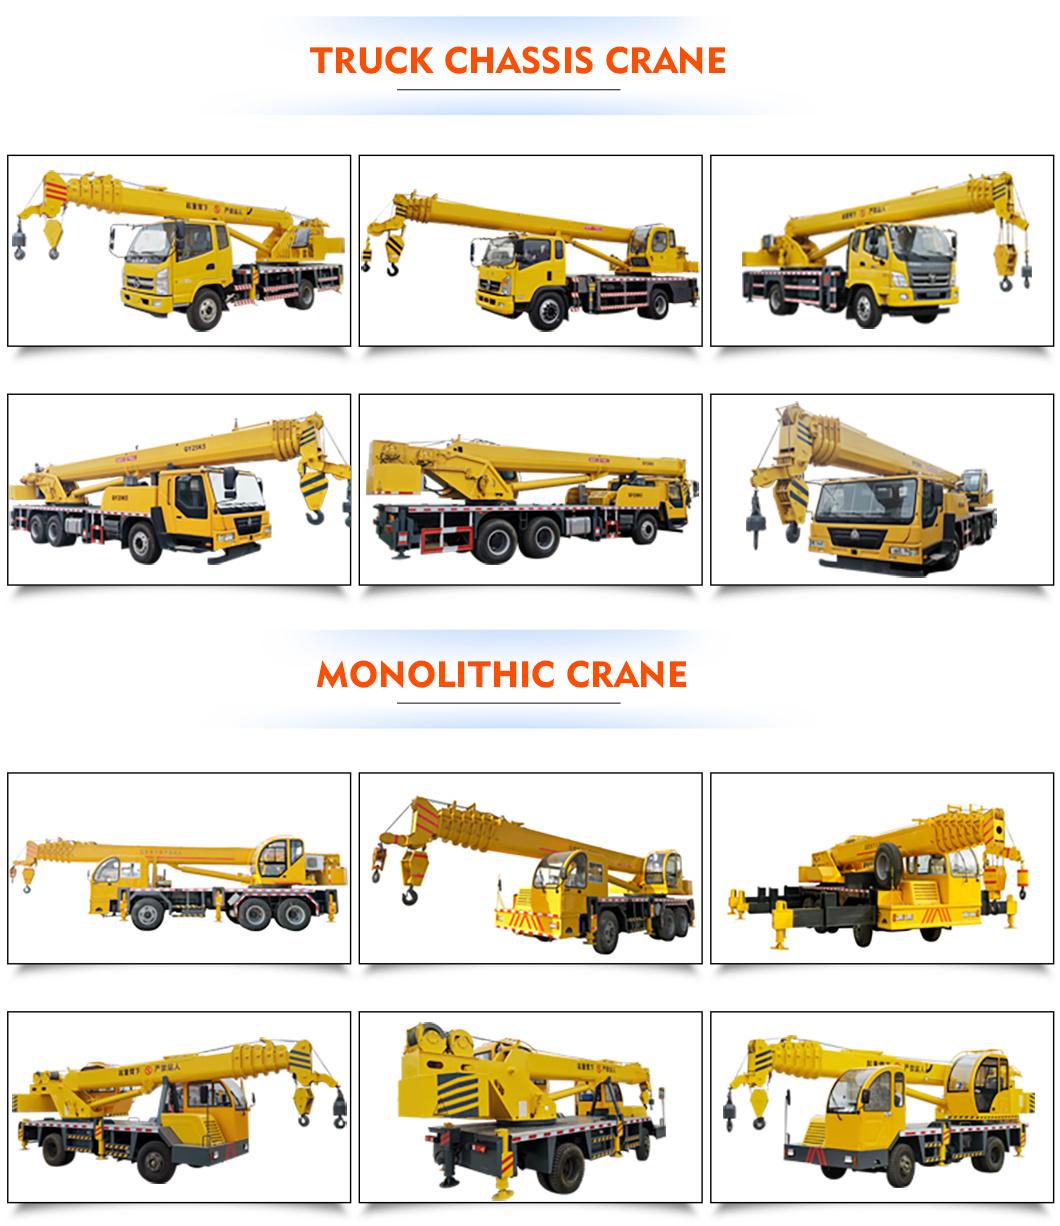 Compact Decoration Mini Mobile Crane 25 Ton China Truck Crane Specifications List Price